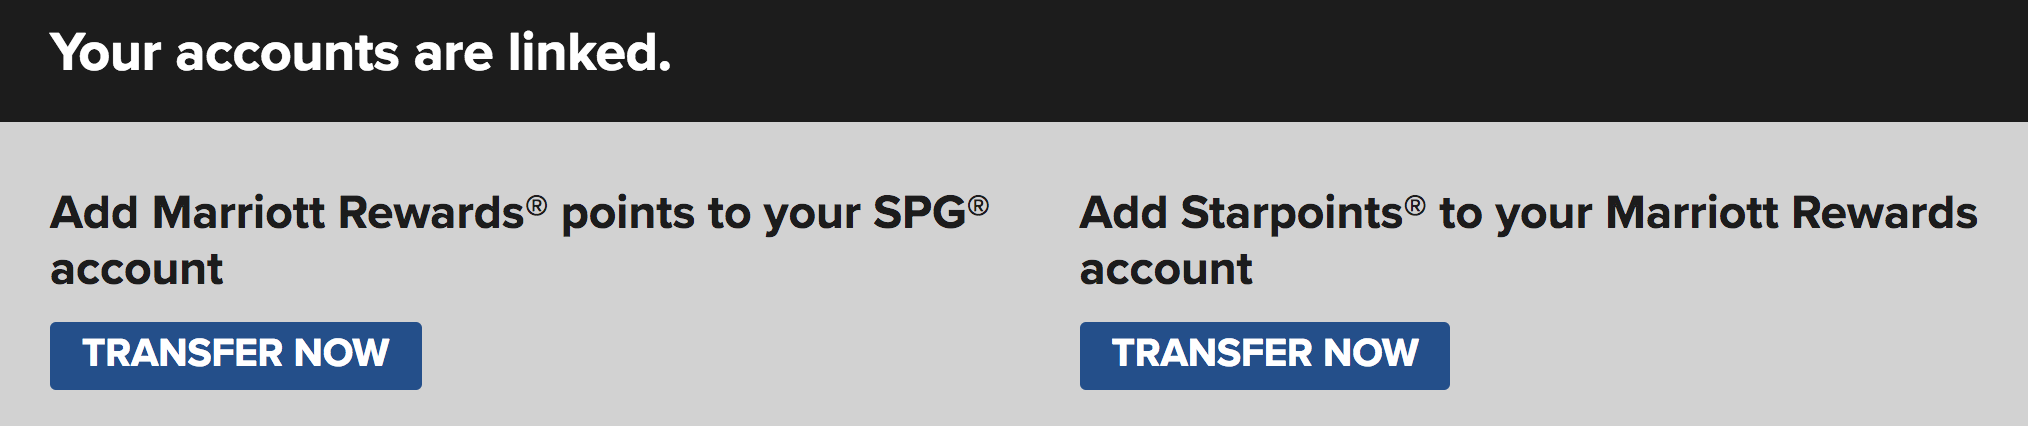 SPG Marriott linking accounts screenshot